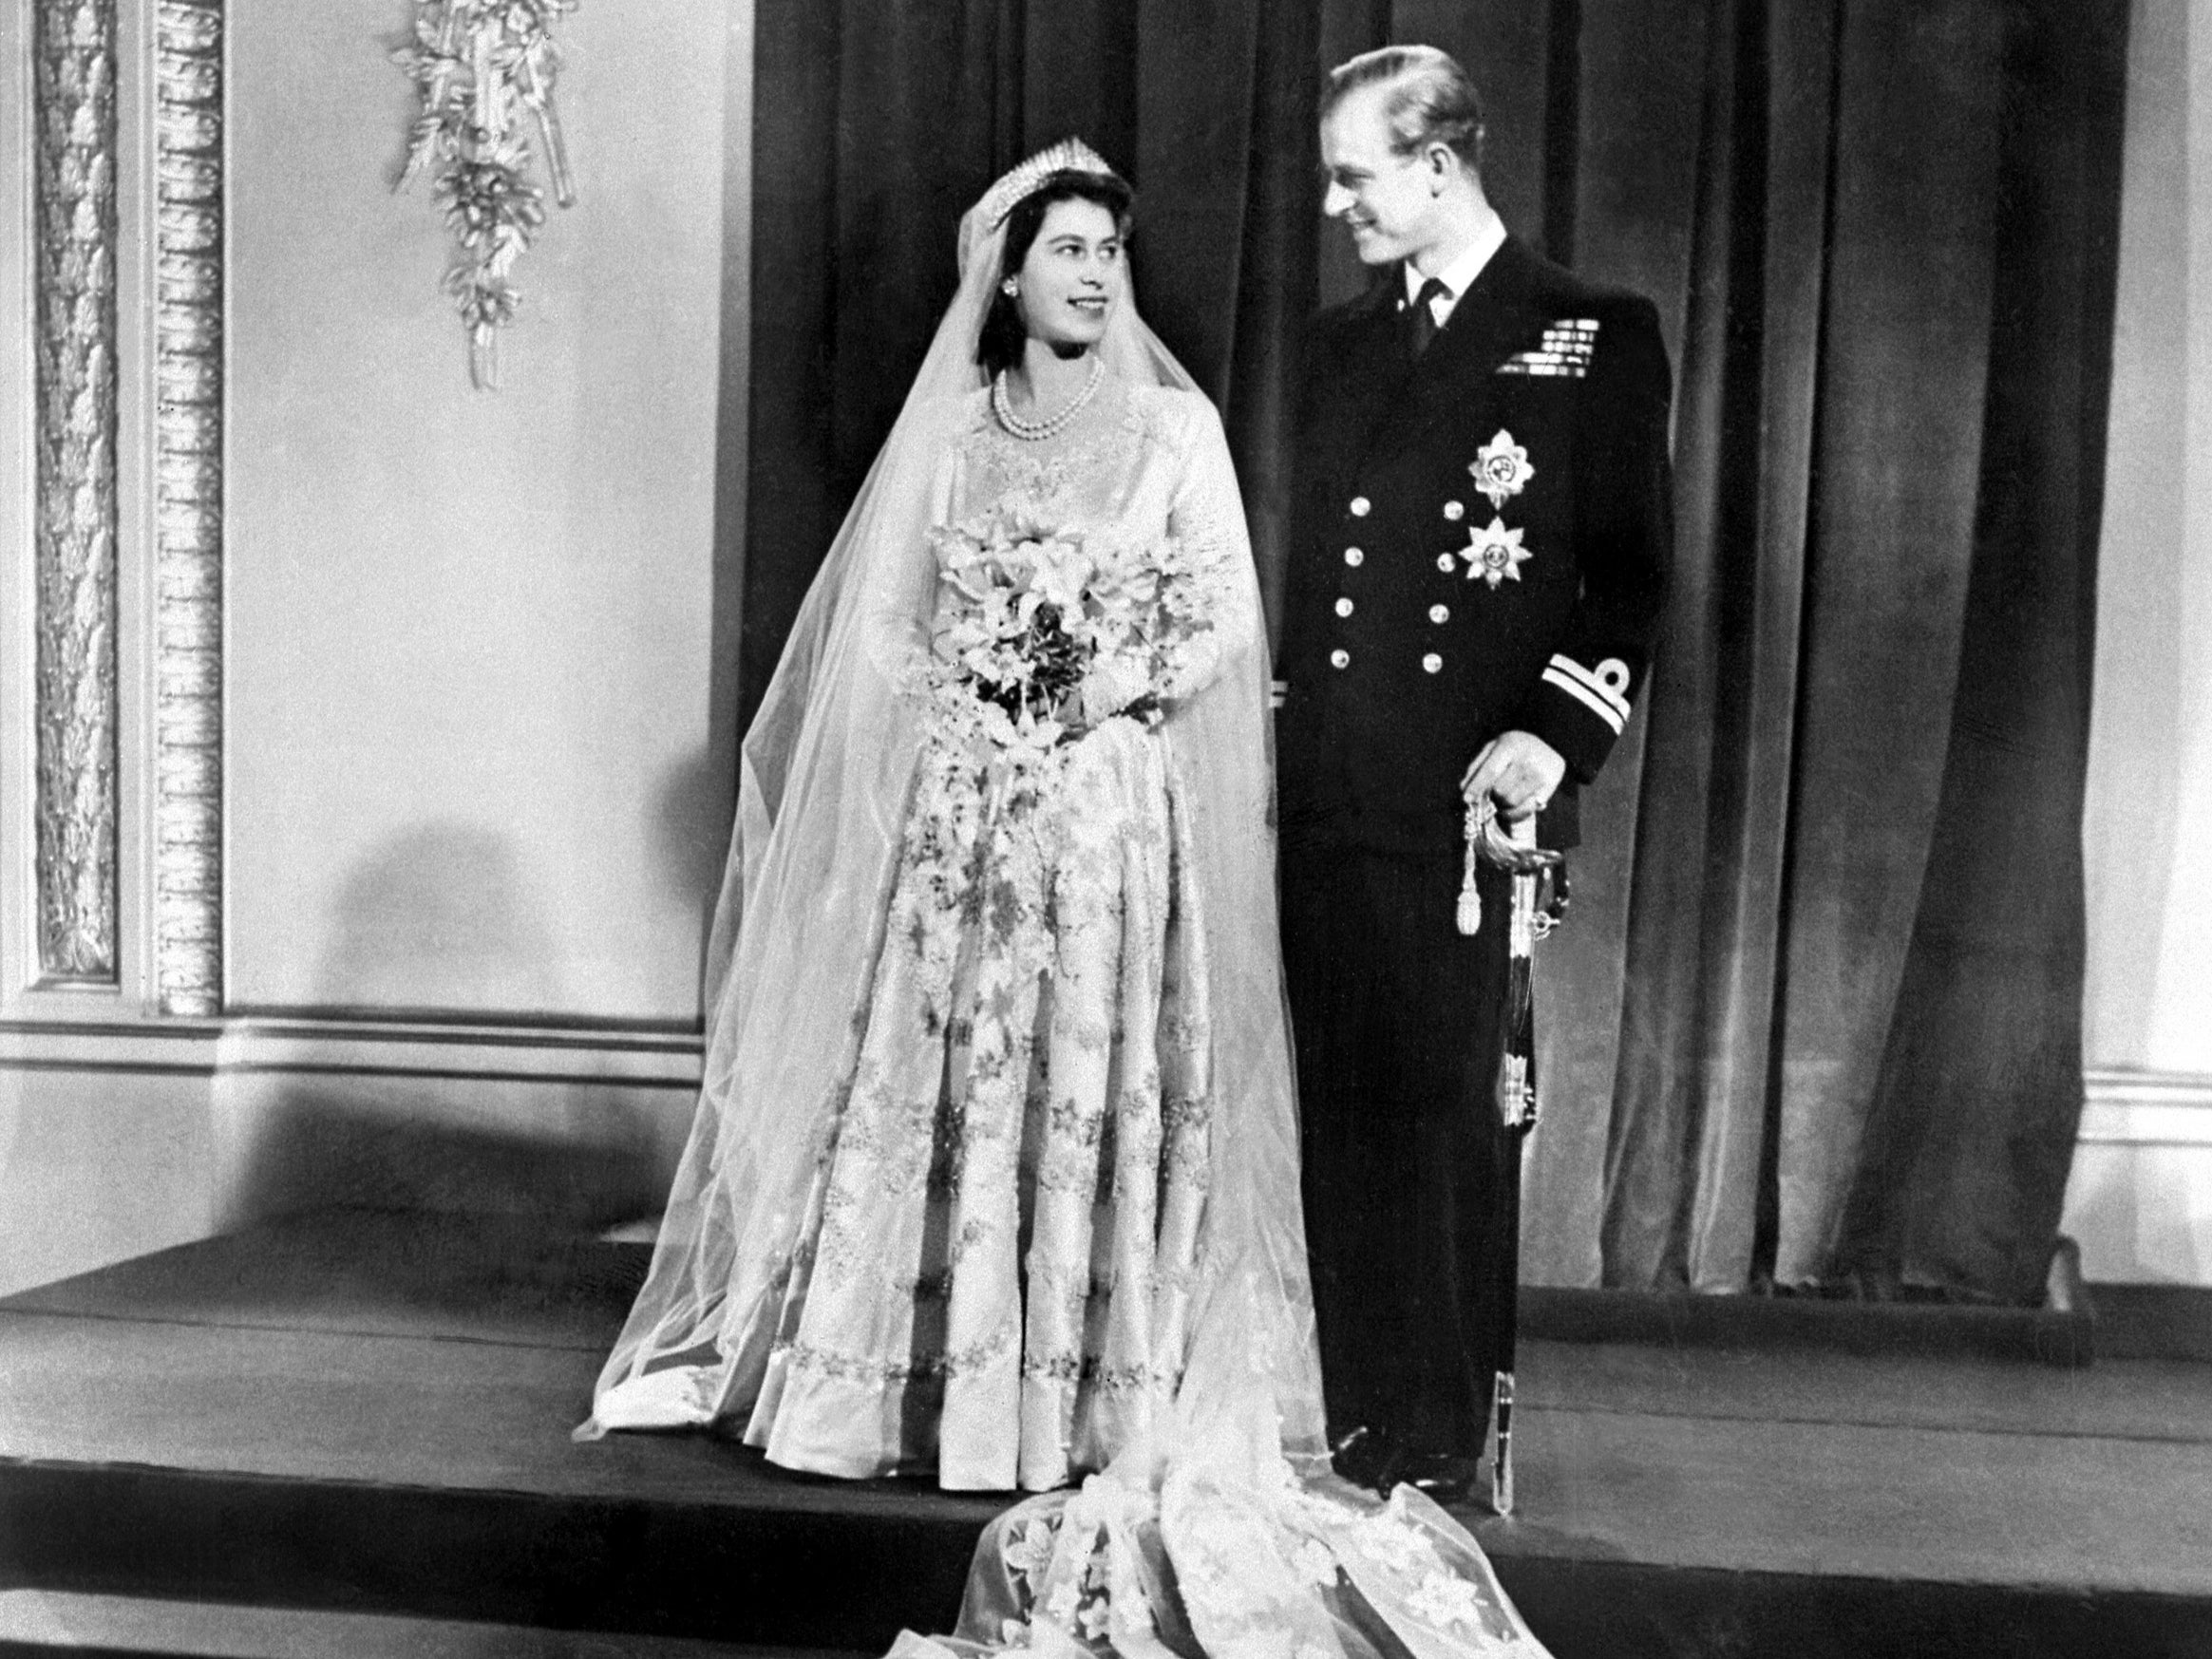 Britain's Princess Elizabeth (future Queen Elizabeth II) (L) and Philip, Duke of Edinburgh (R) pose on their wedding day at Buckingham Palace in London on November 20, 1947